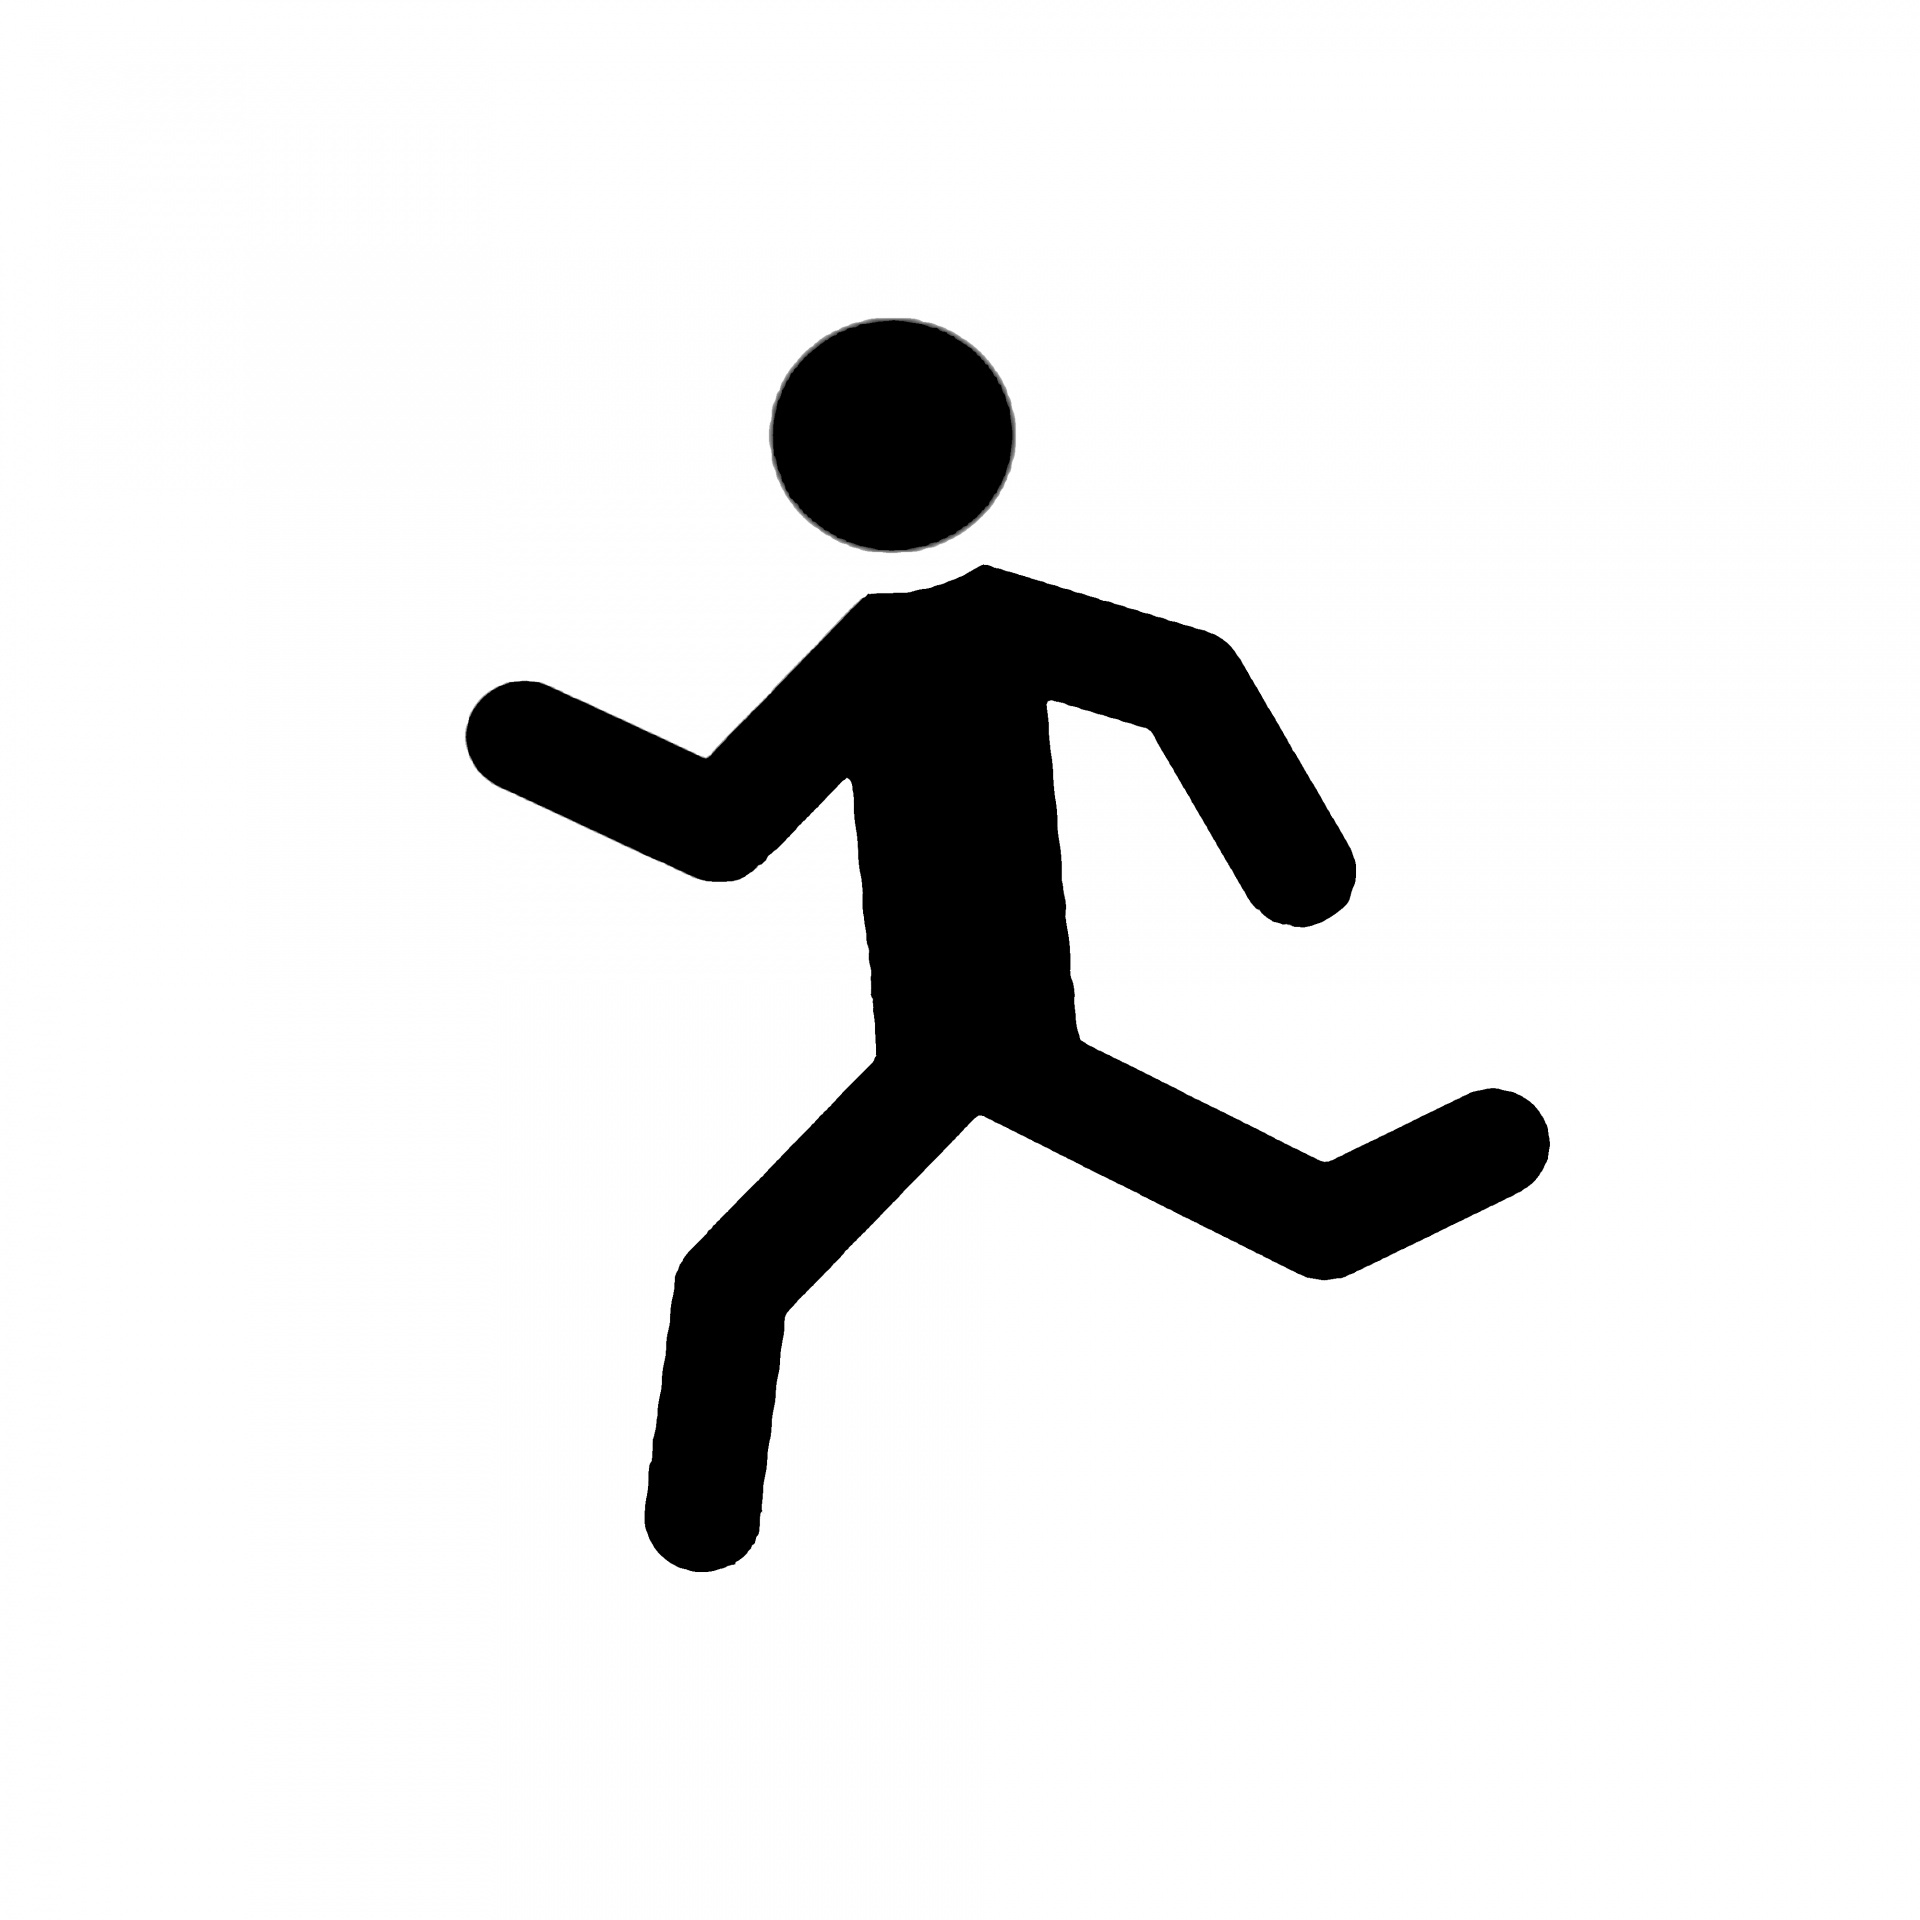 Фигурка бегущего человека